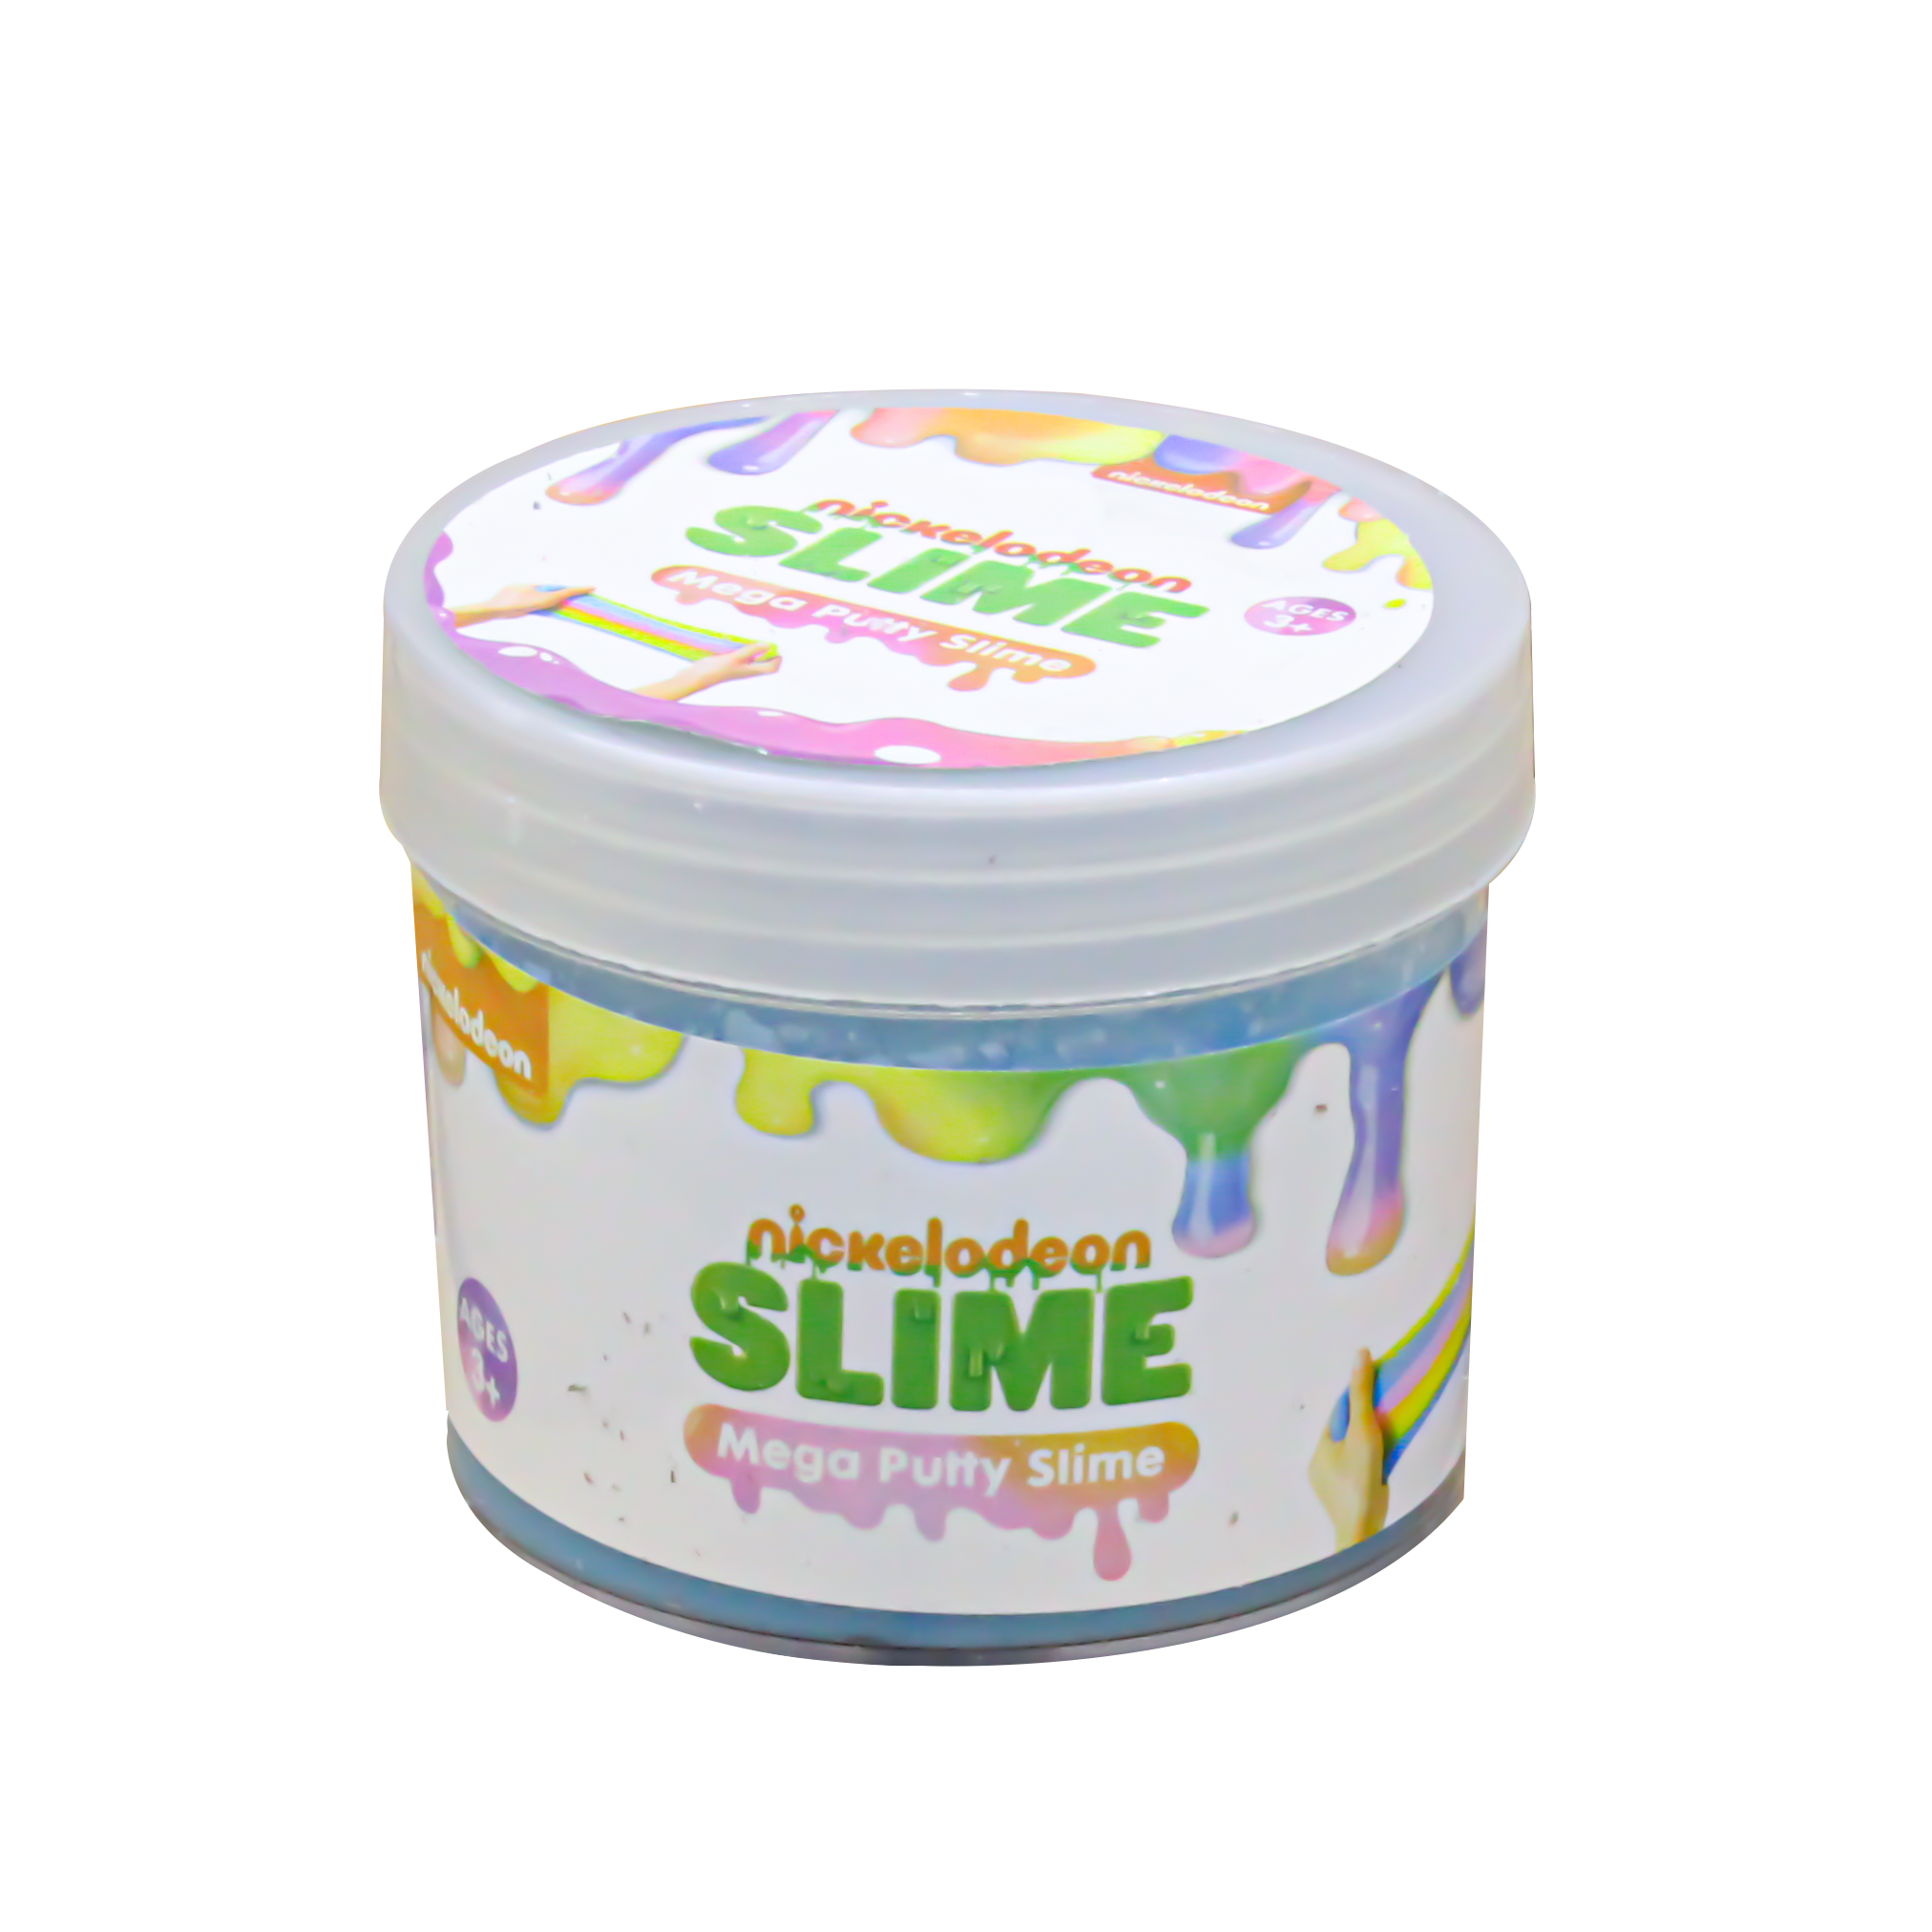 Wow Play Nickelodeon Slime Mega Putty Slime - Blue